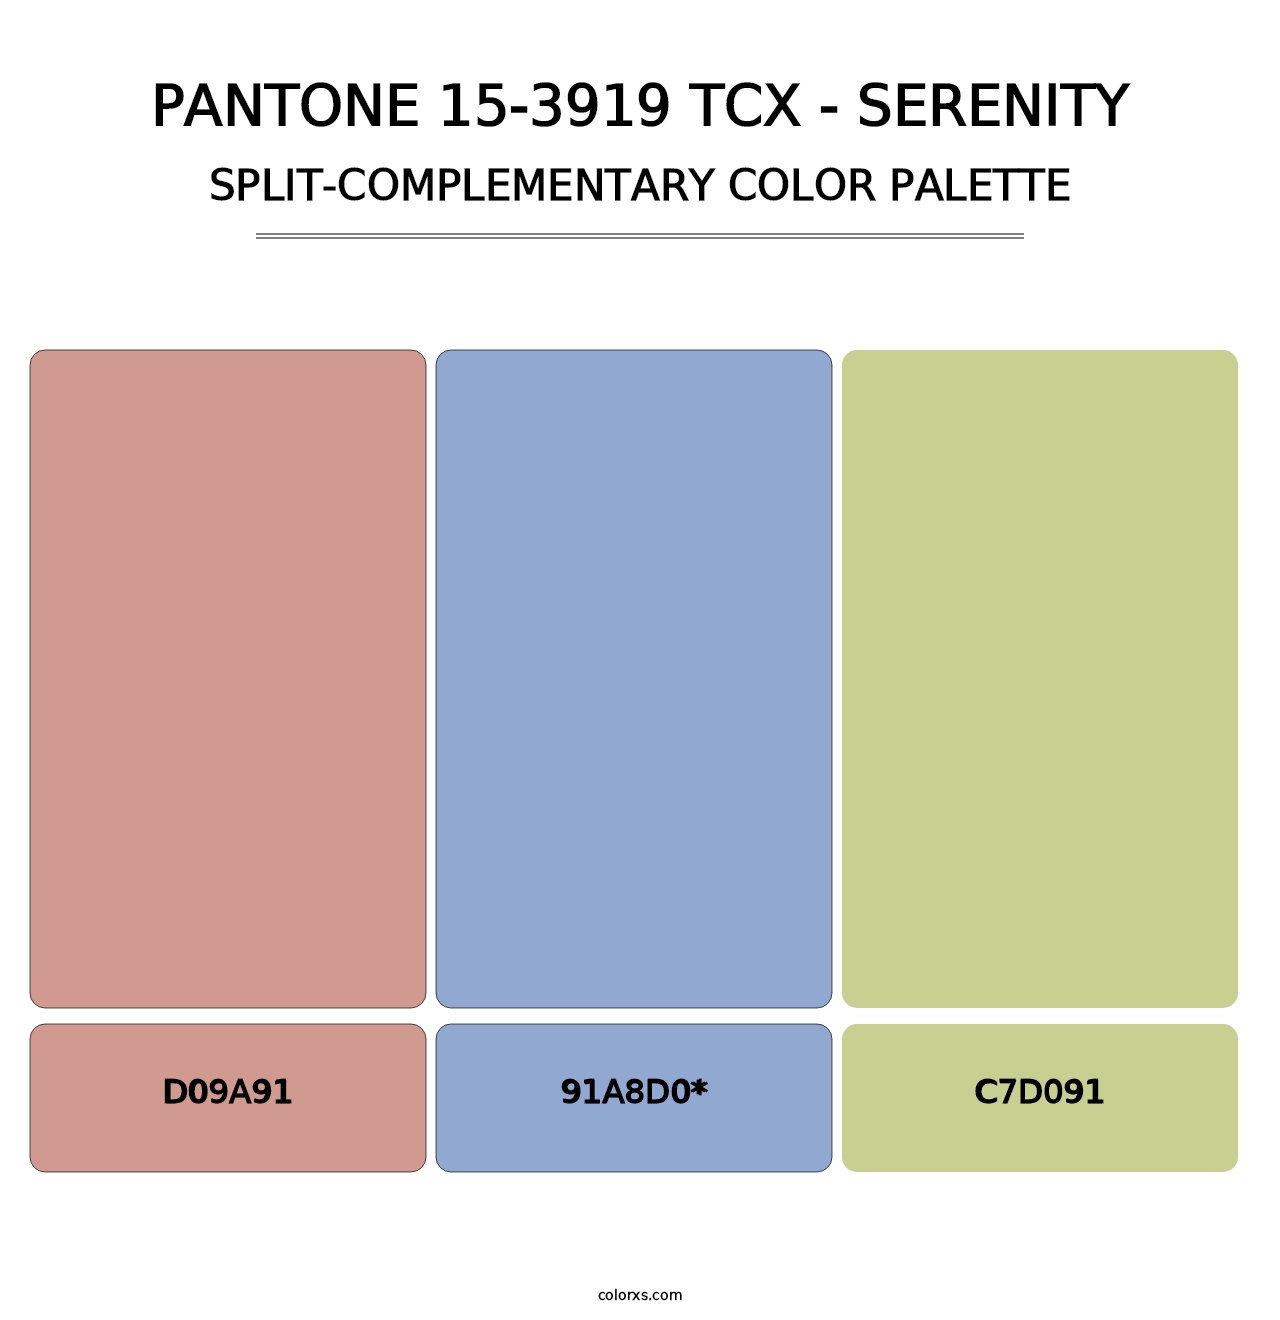 PANTONE 15-3919 TCX - Serenity - Split-Complementary Color Palette